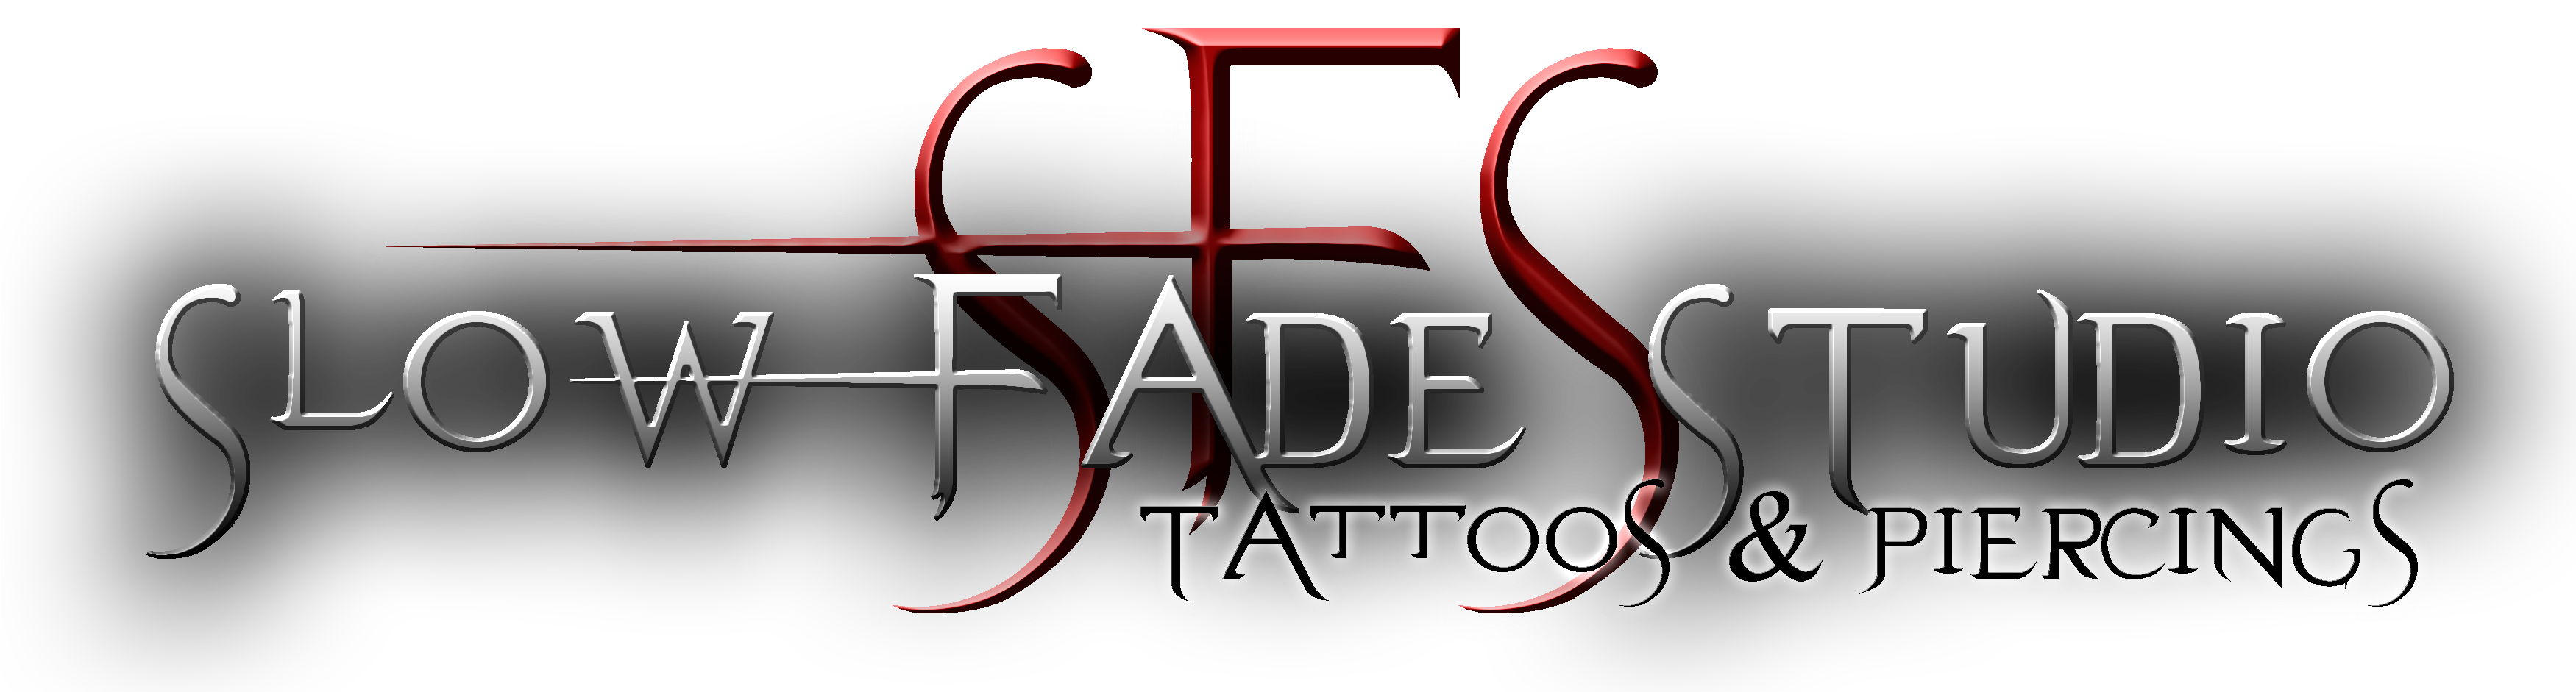 Slow Fade Studio Tattoo Piercing Logo PNG